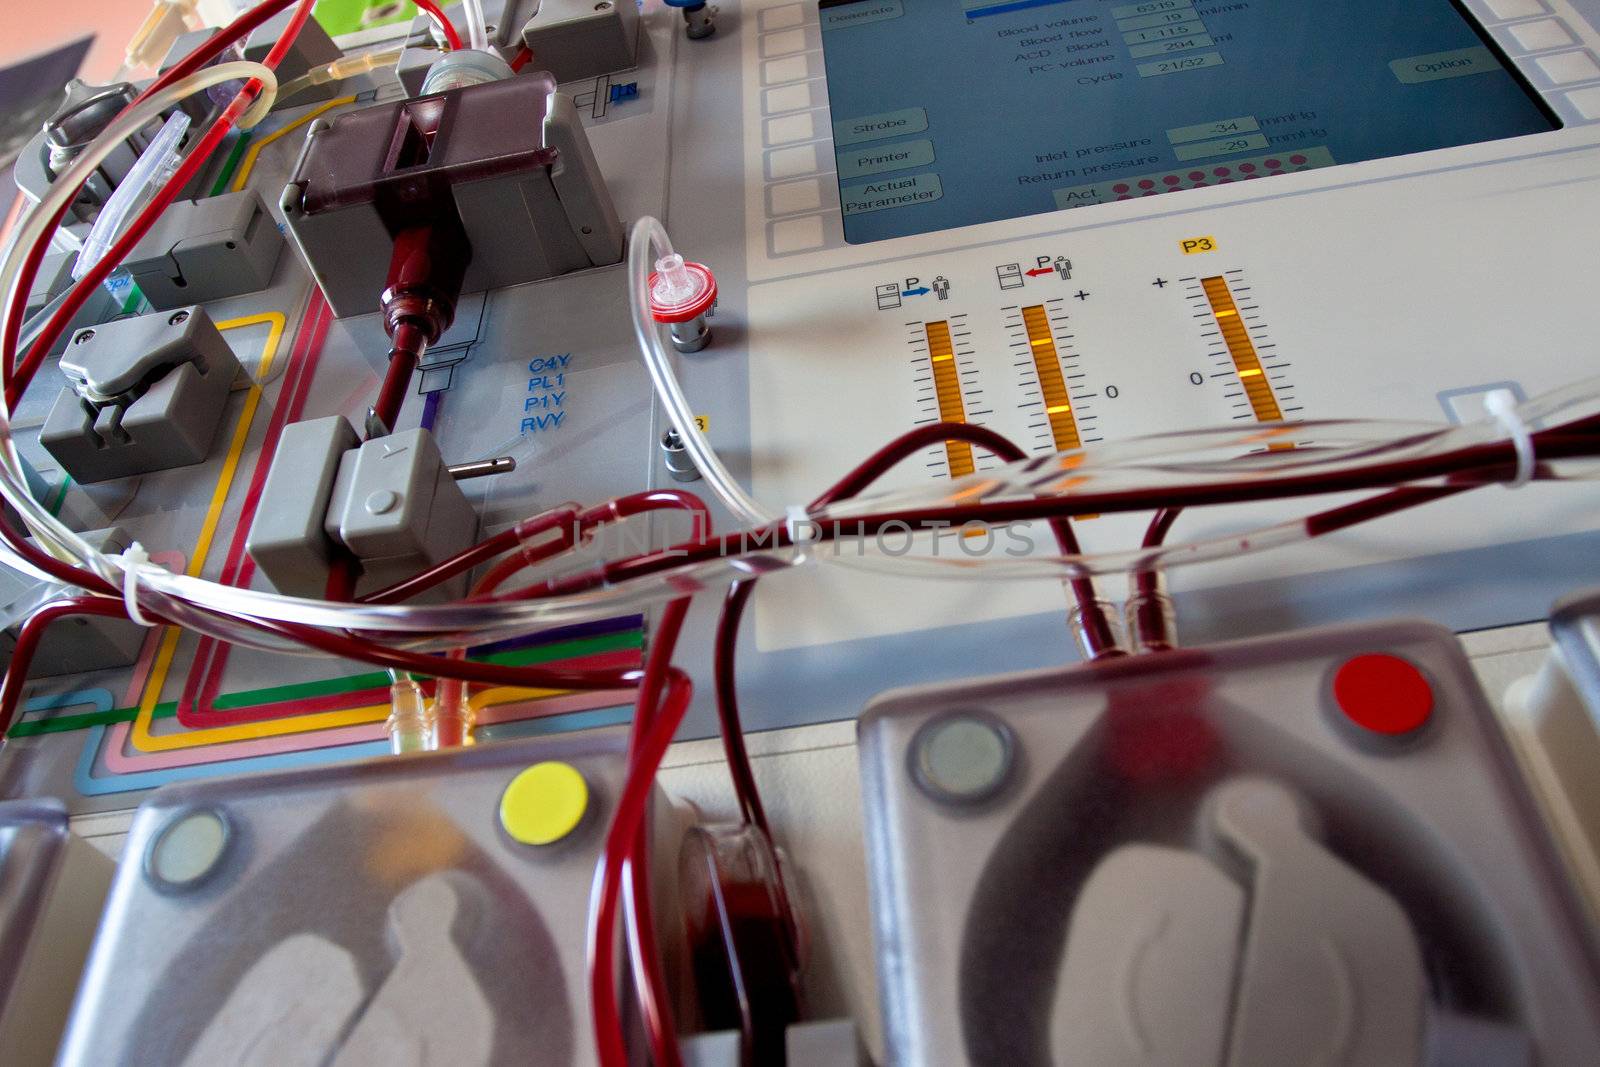 Cell saver device for blood reinfusion, stem cells transplantation